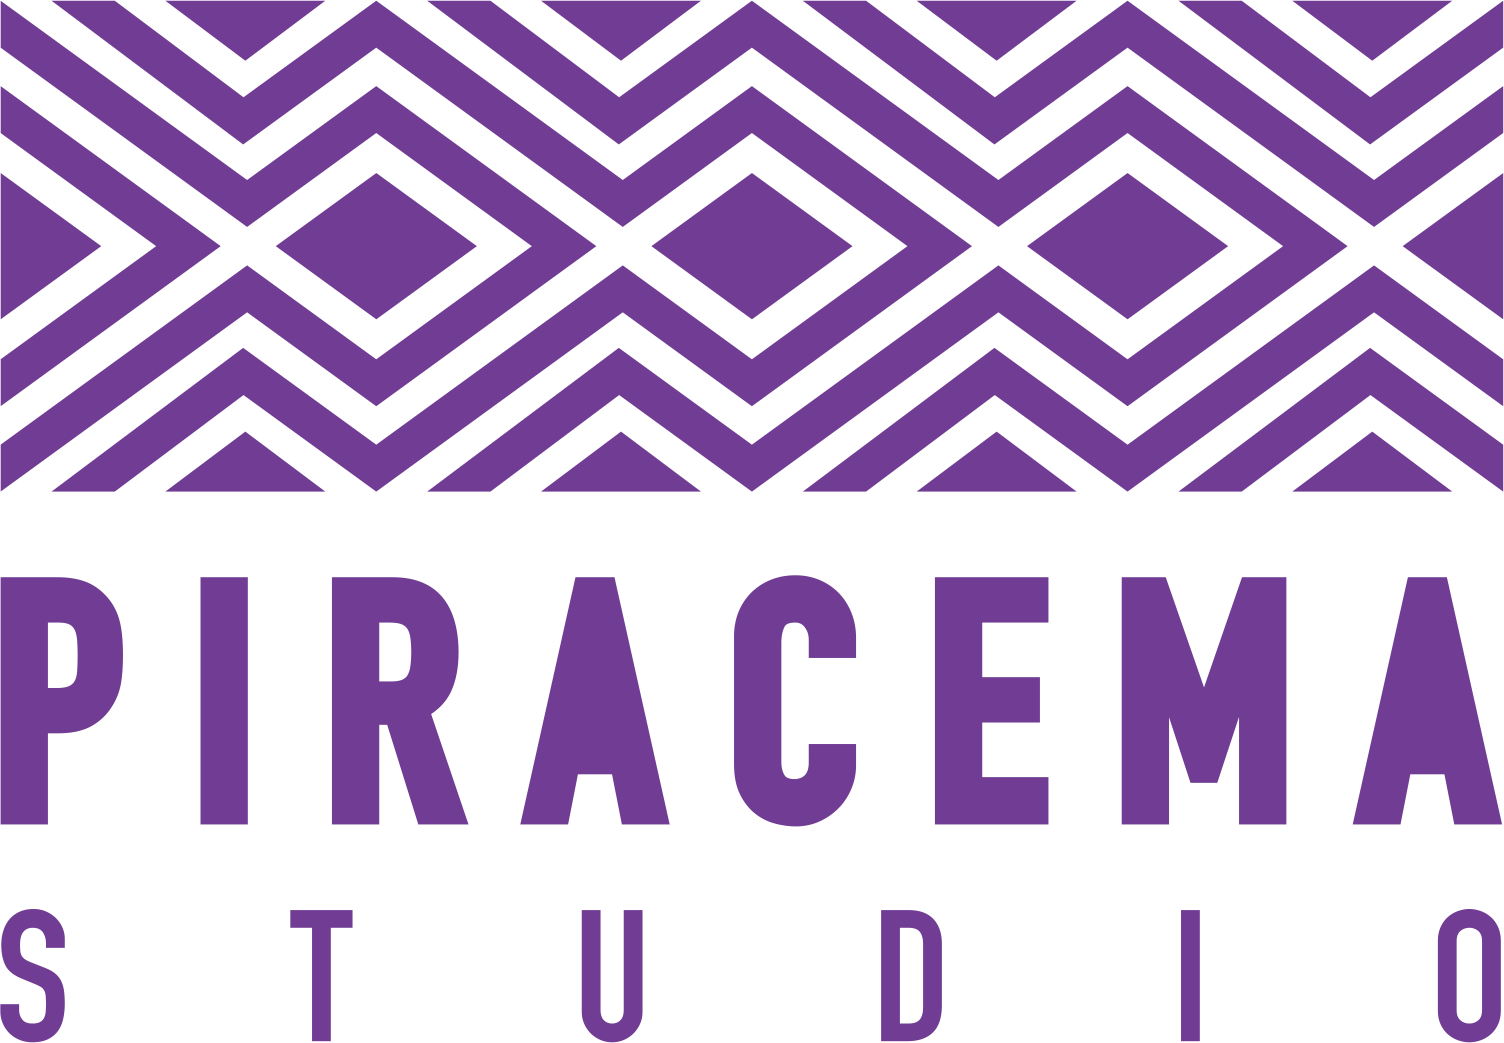 Piracema Studio